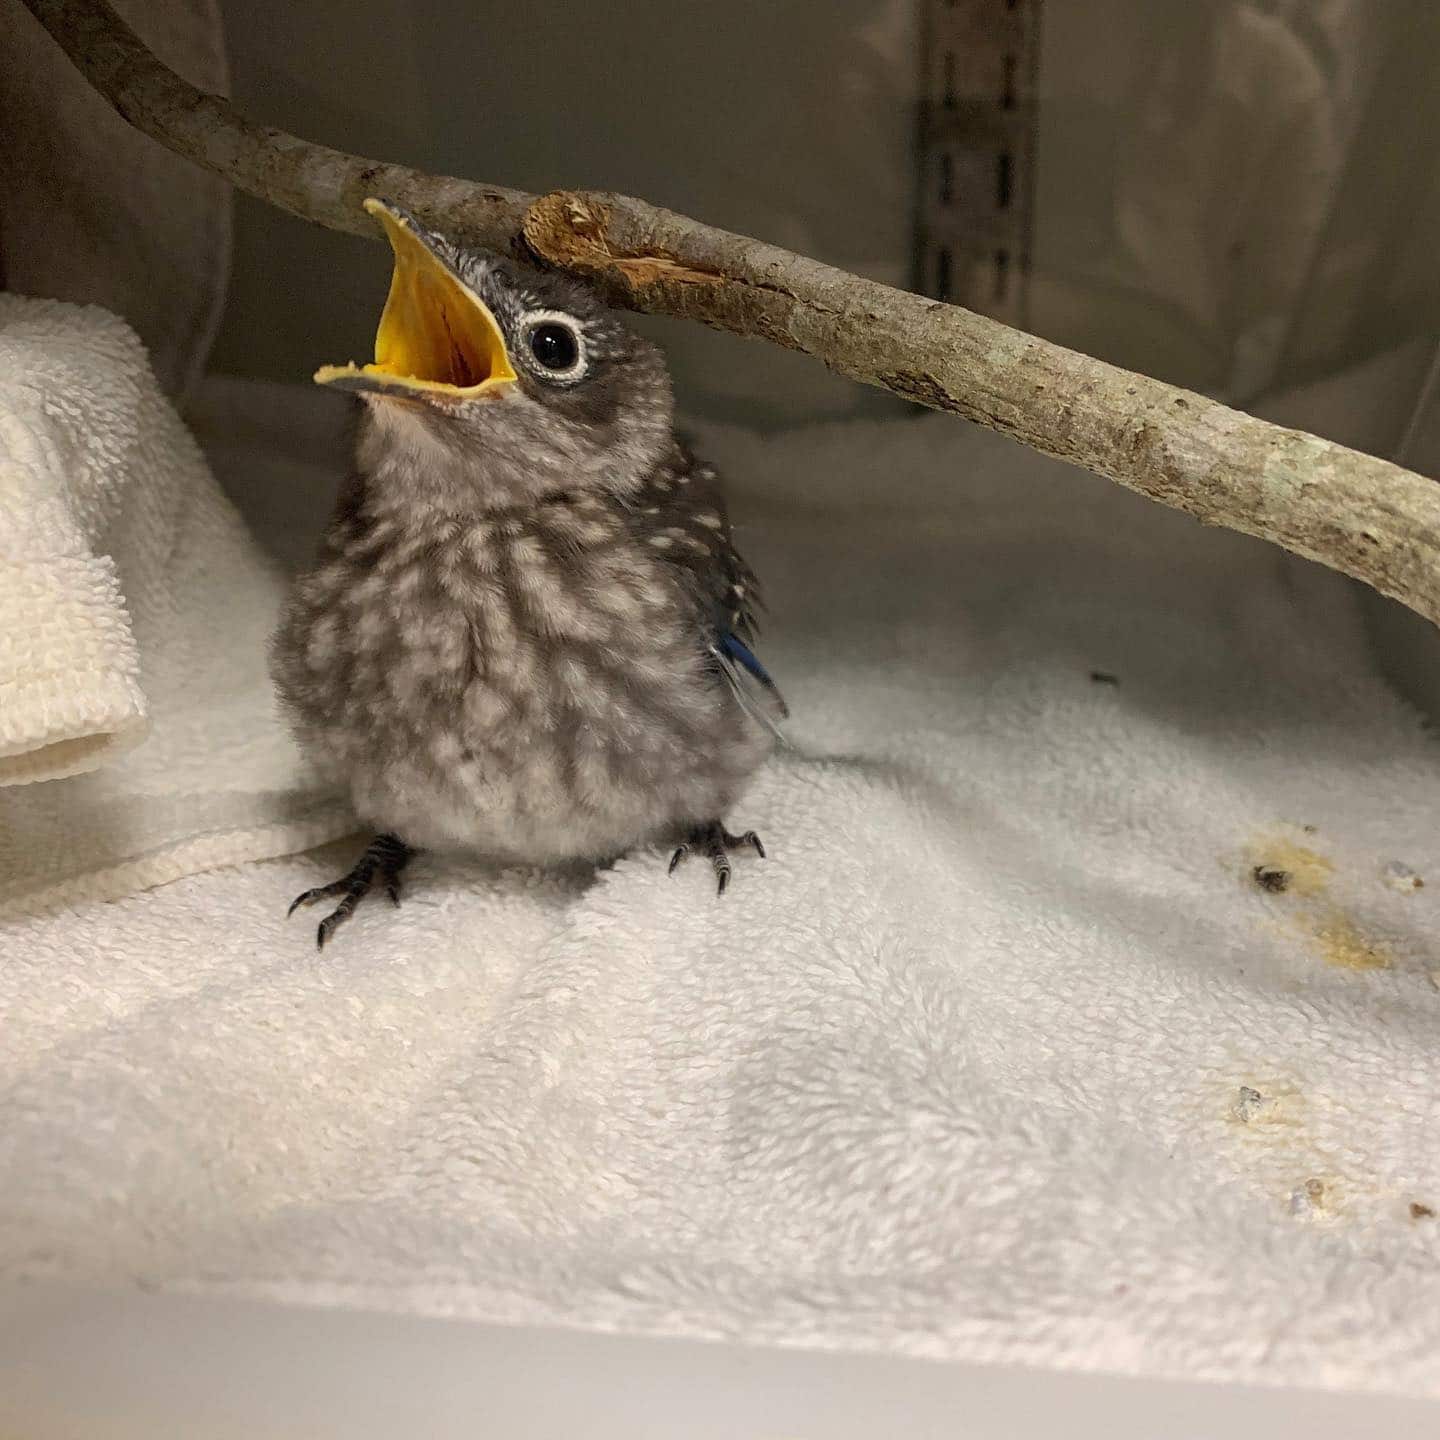 Baby bird receiving treatment